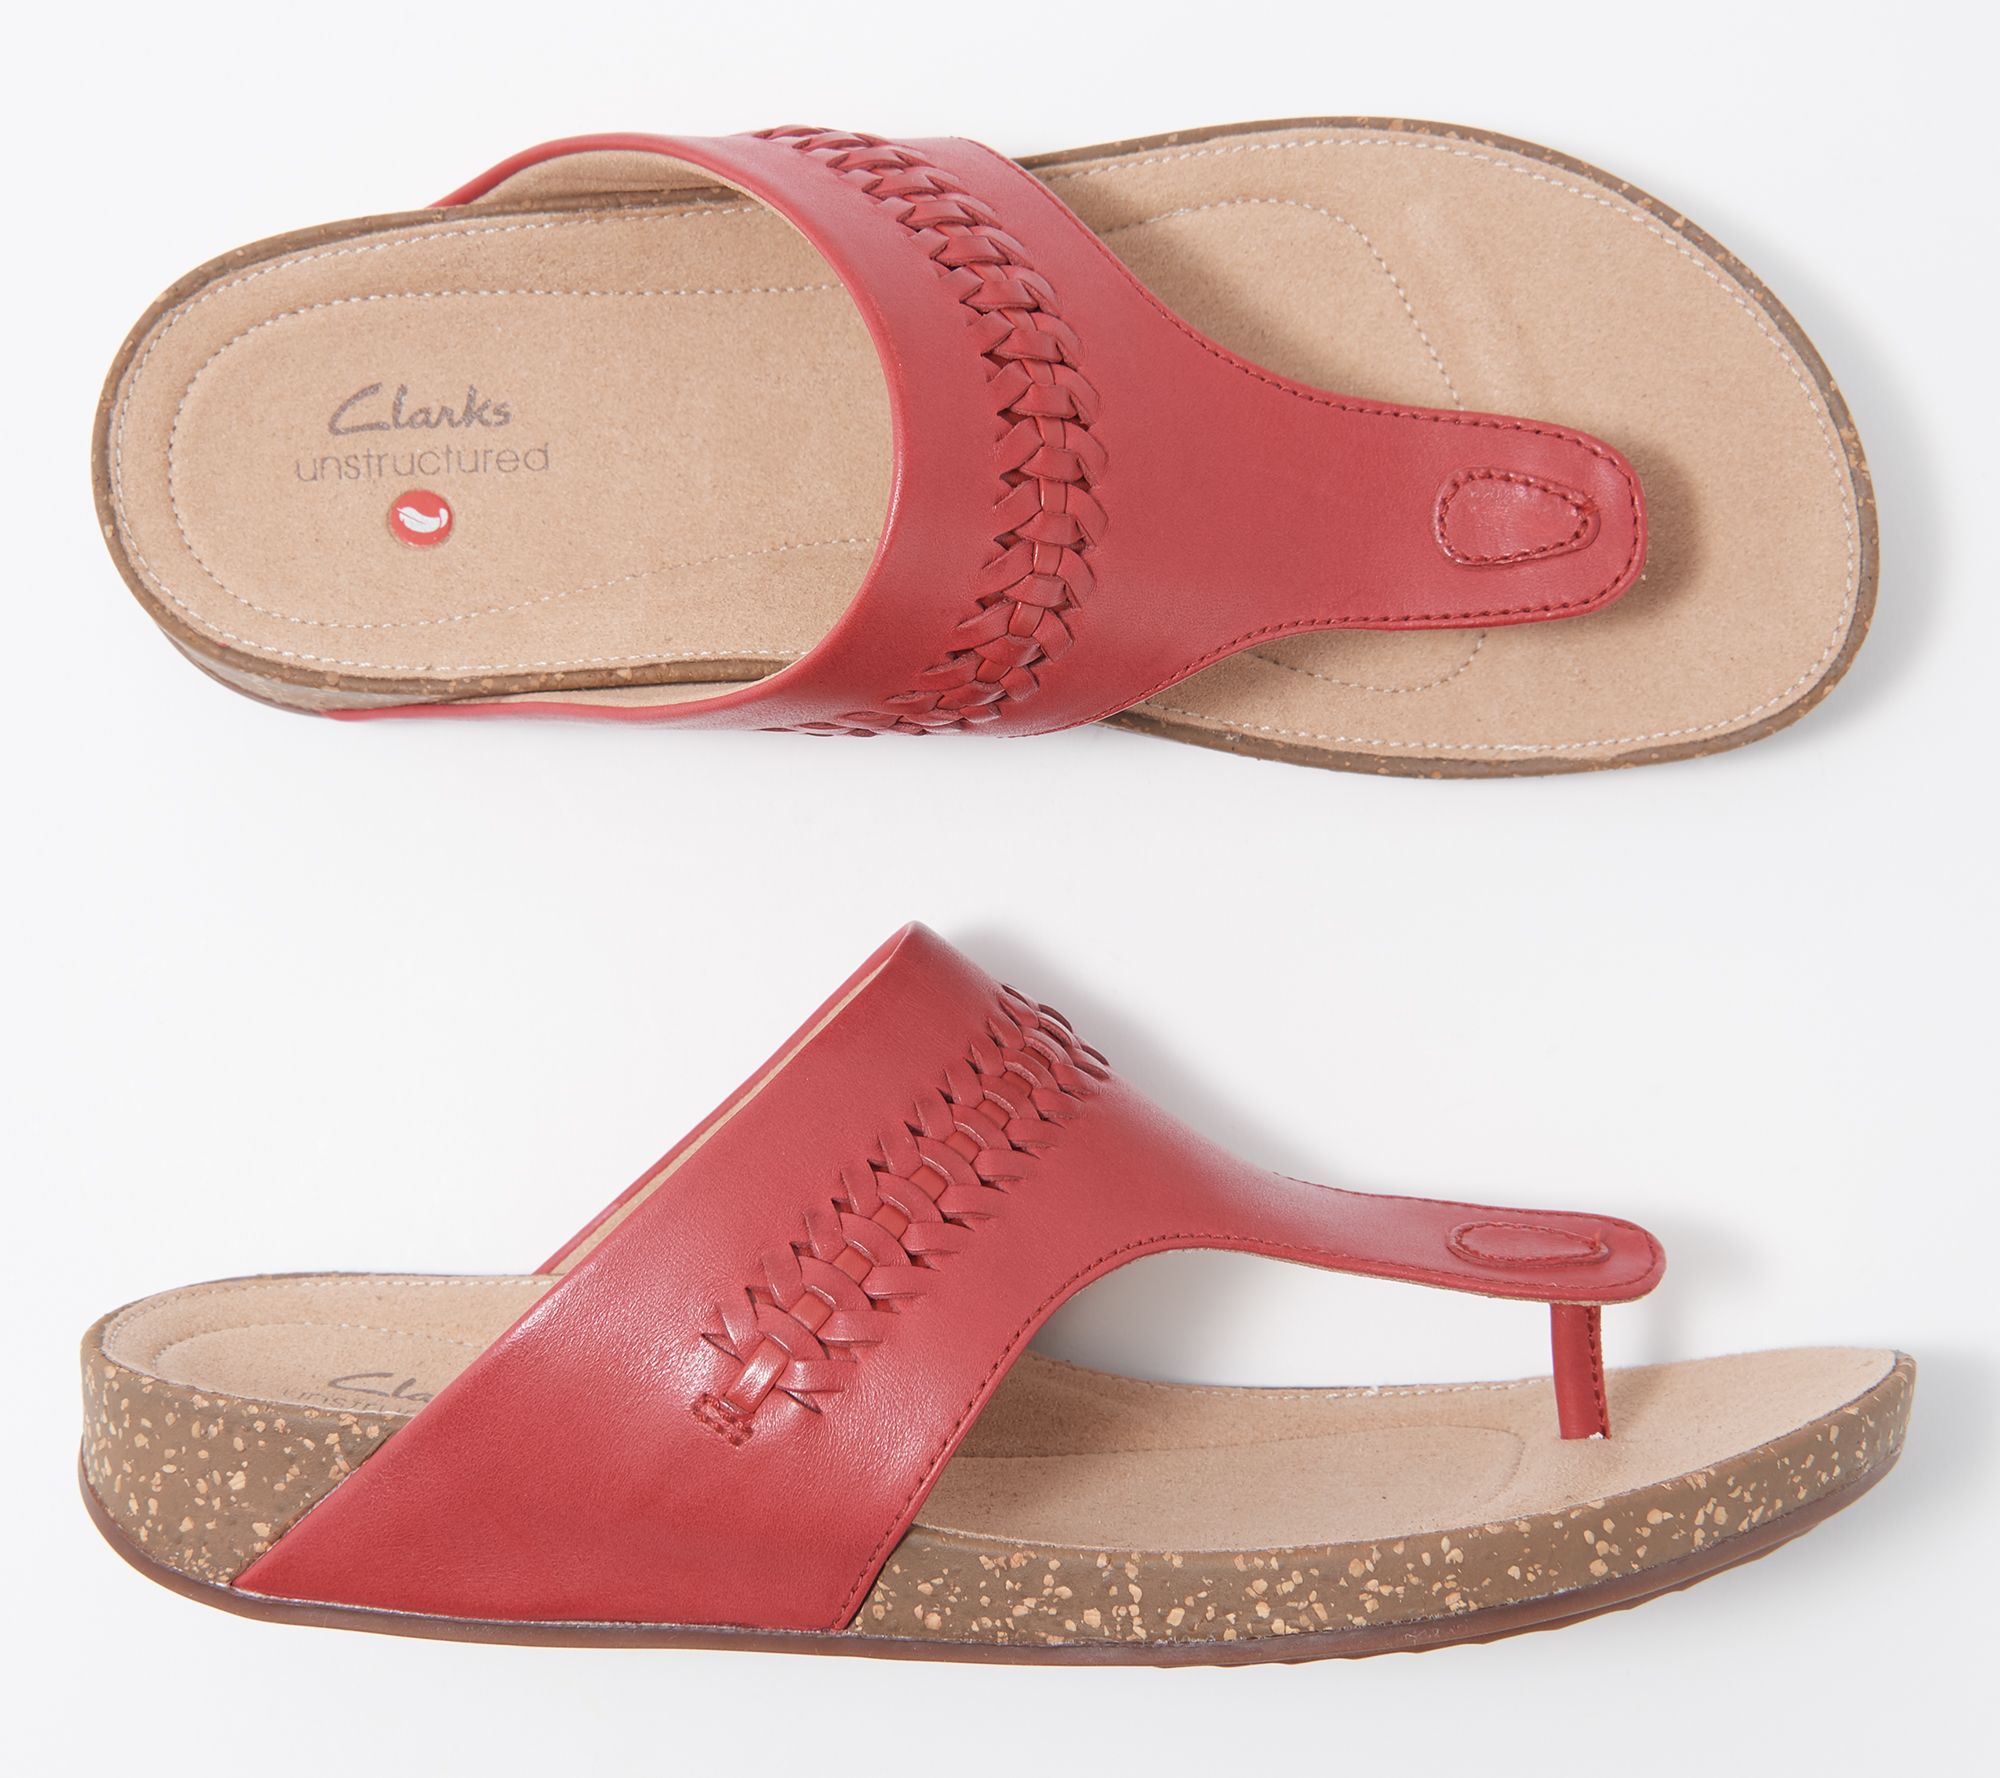 clarks women's unstructured sandals